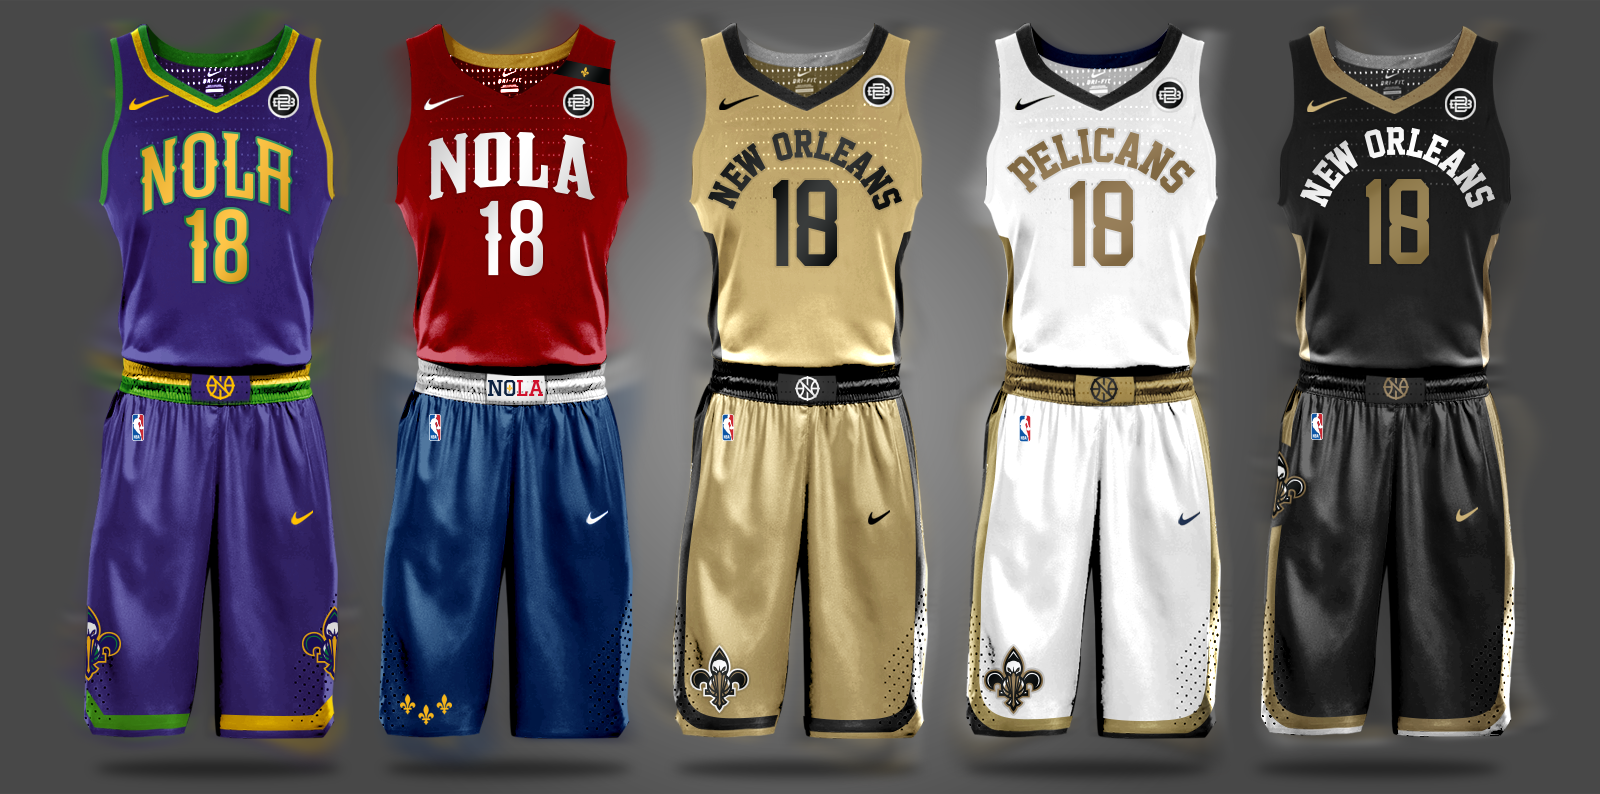 new orleans pelicans alternate jersey